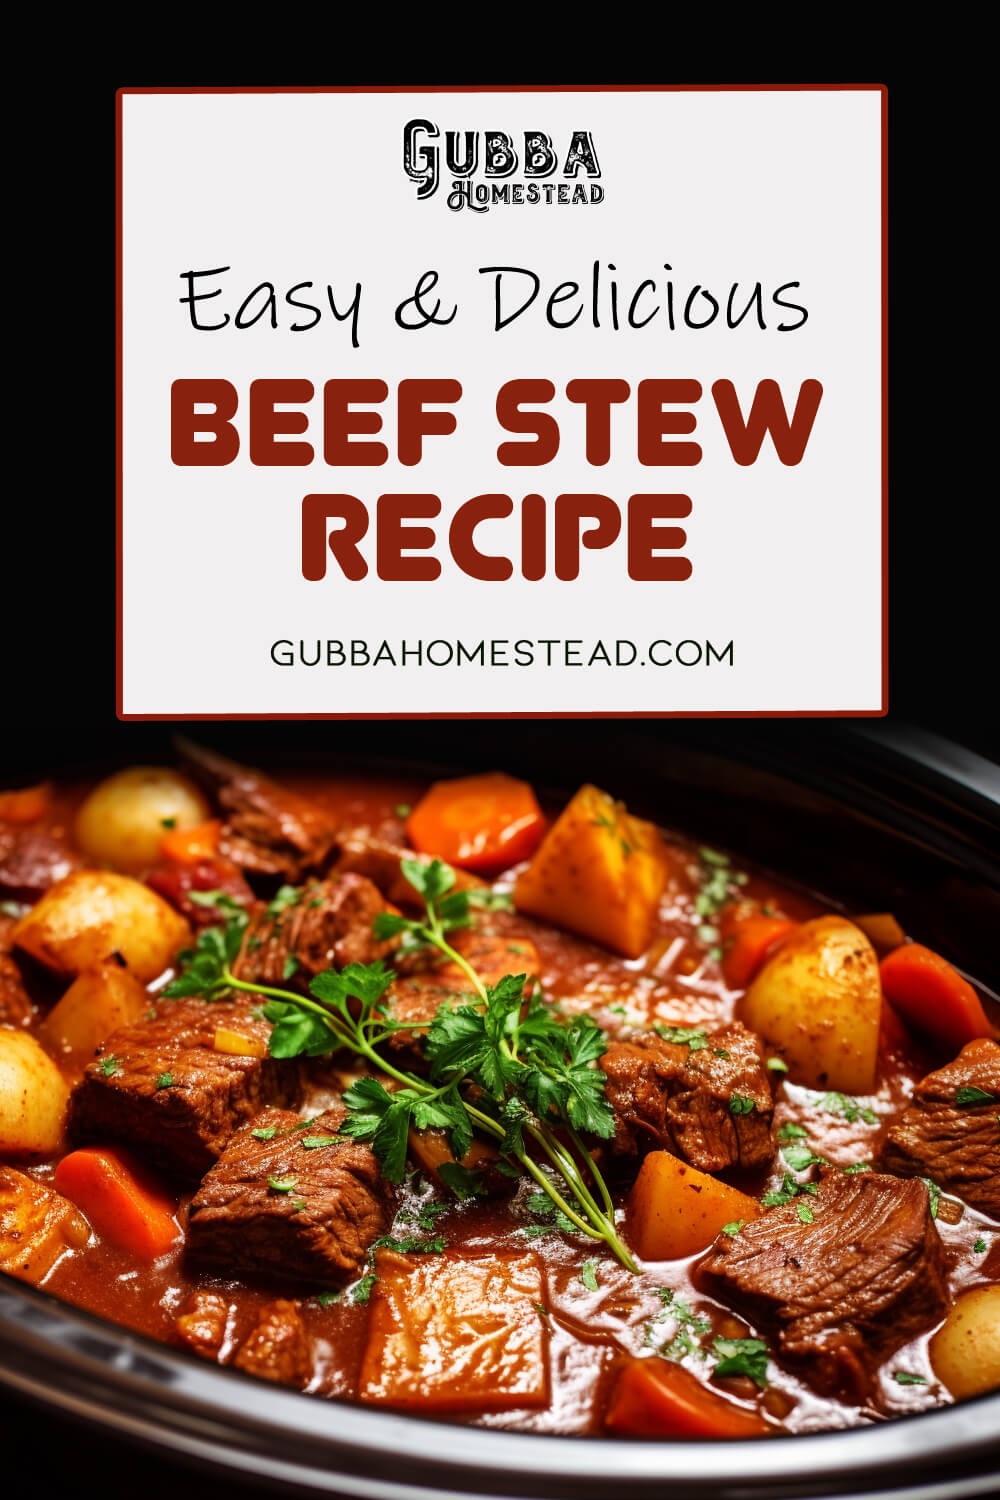 Easy & Delicious Beef Stew Recipe